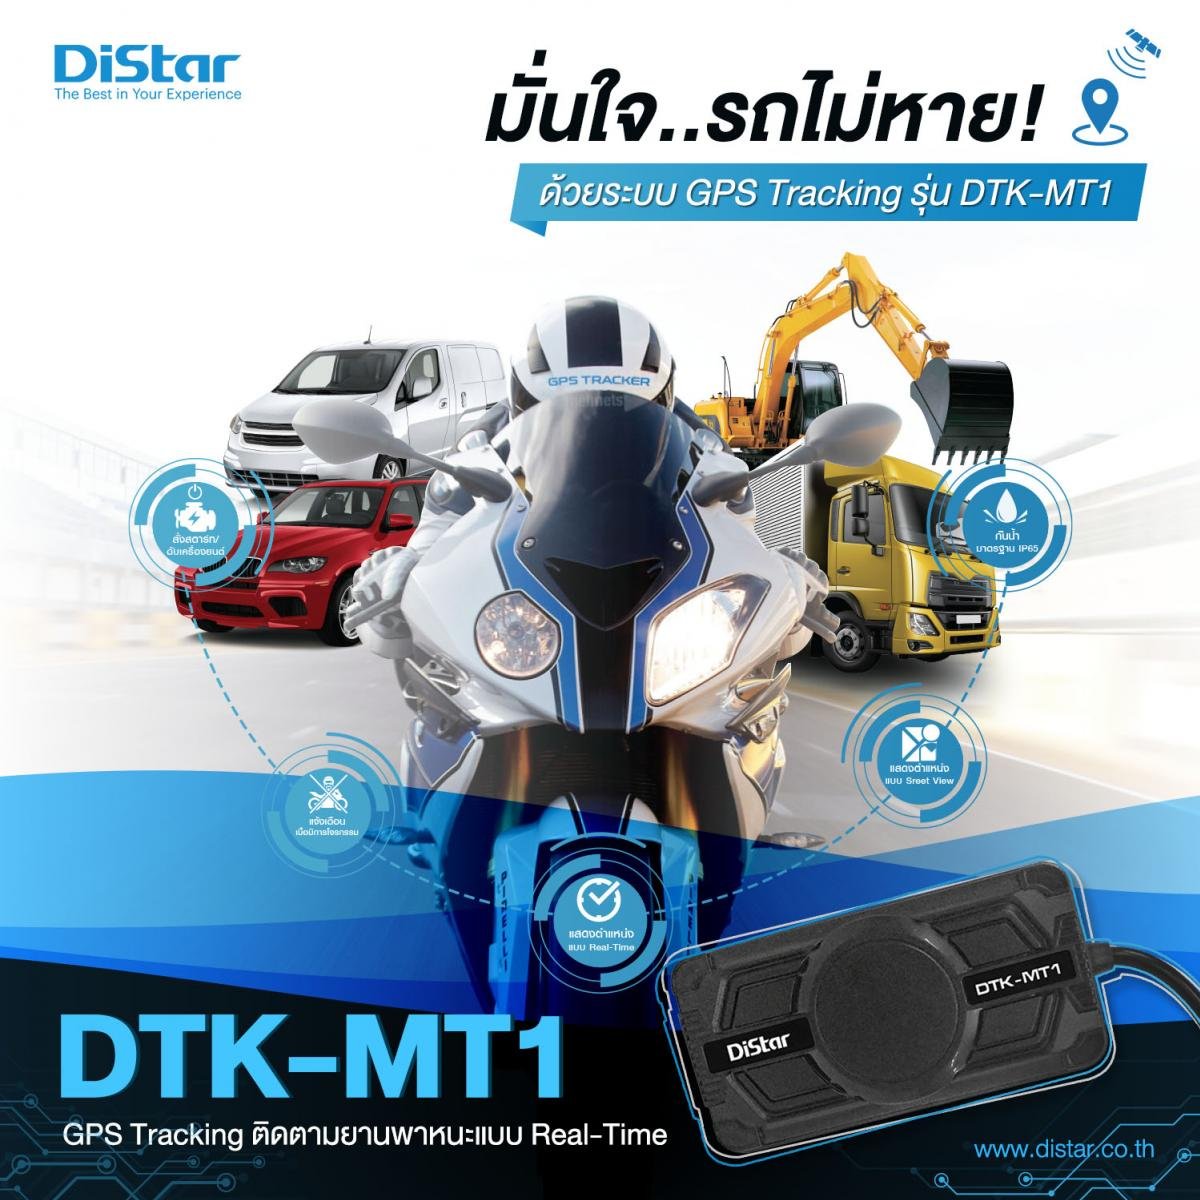 D Smart Tracker GPS car tracking model DTK-MT1